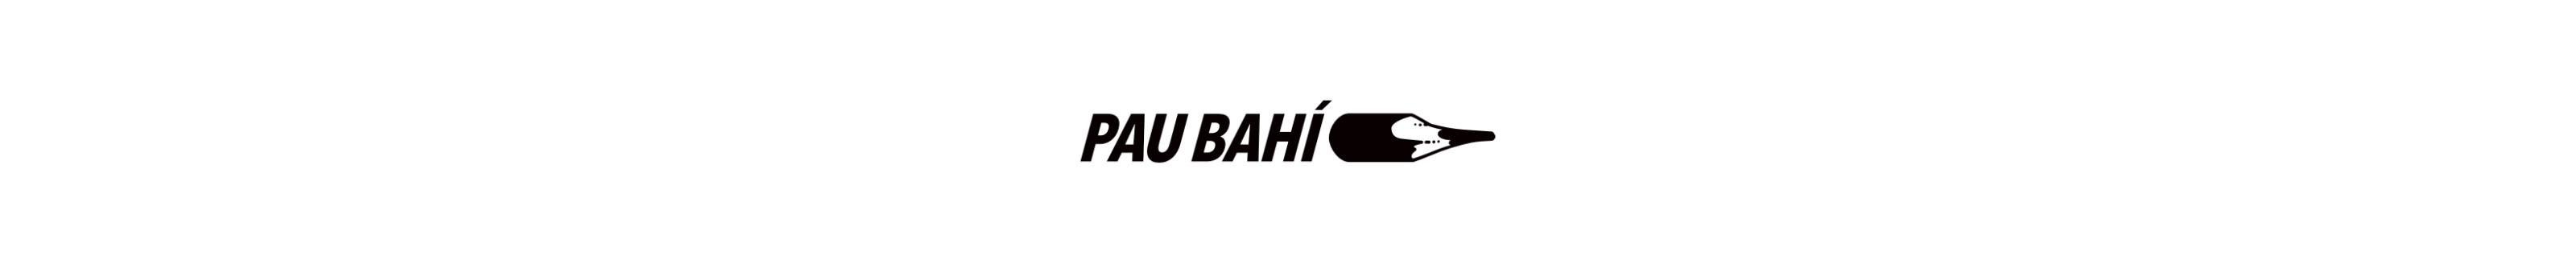 Pau Bahí Segura's profile banner